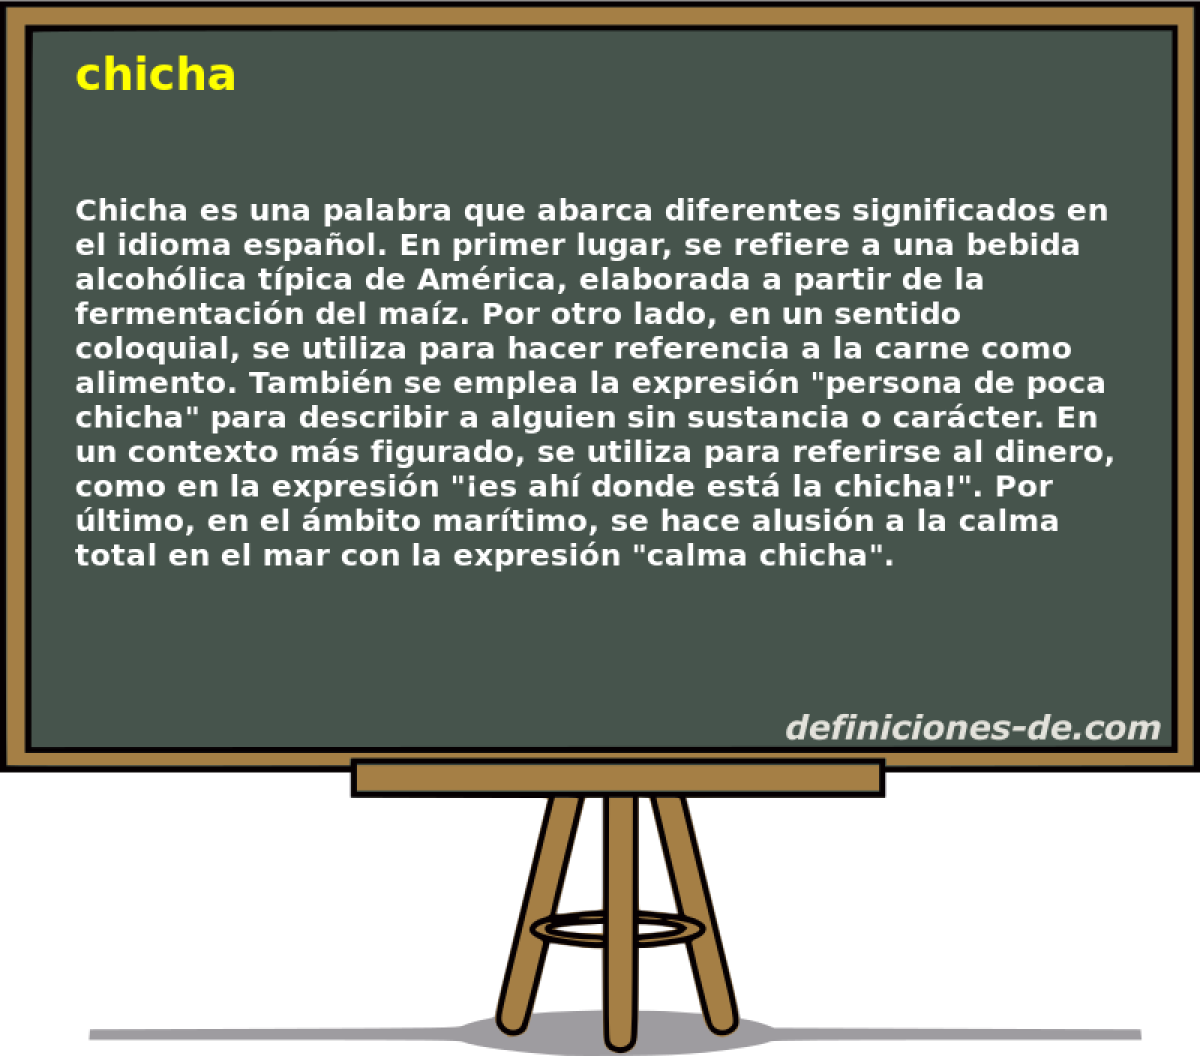 chicha 